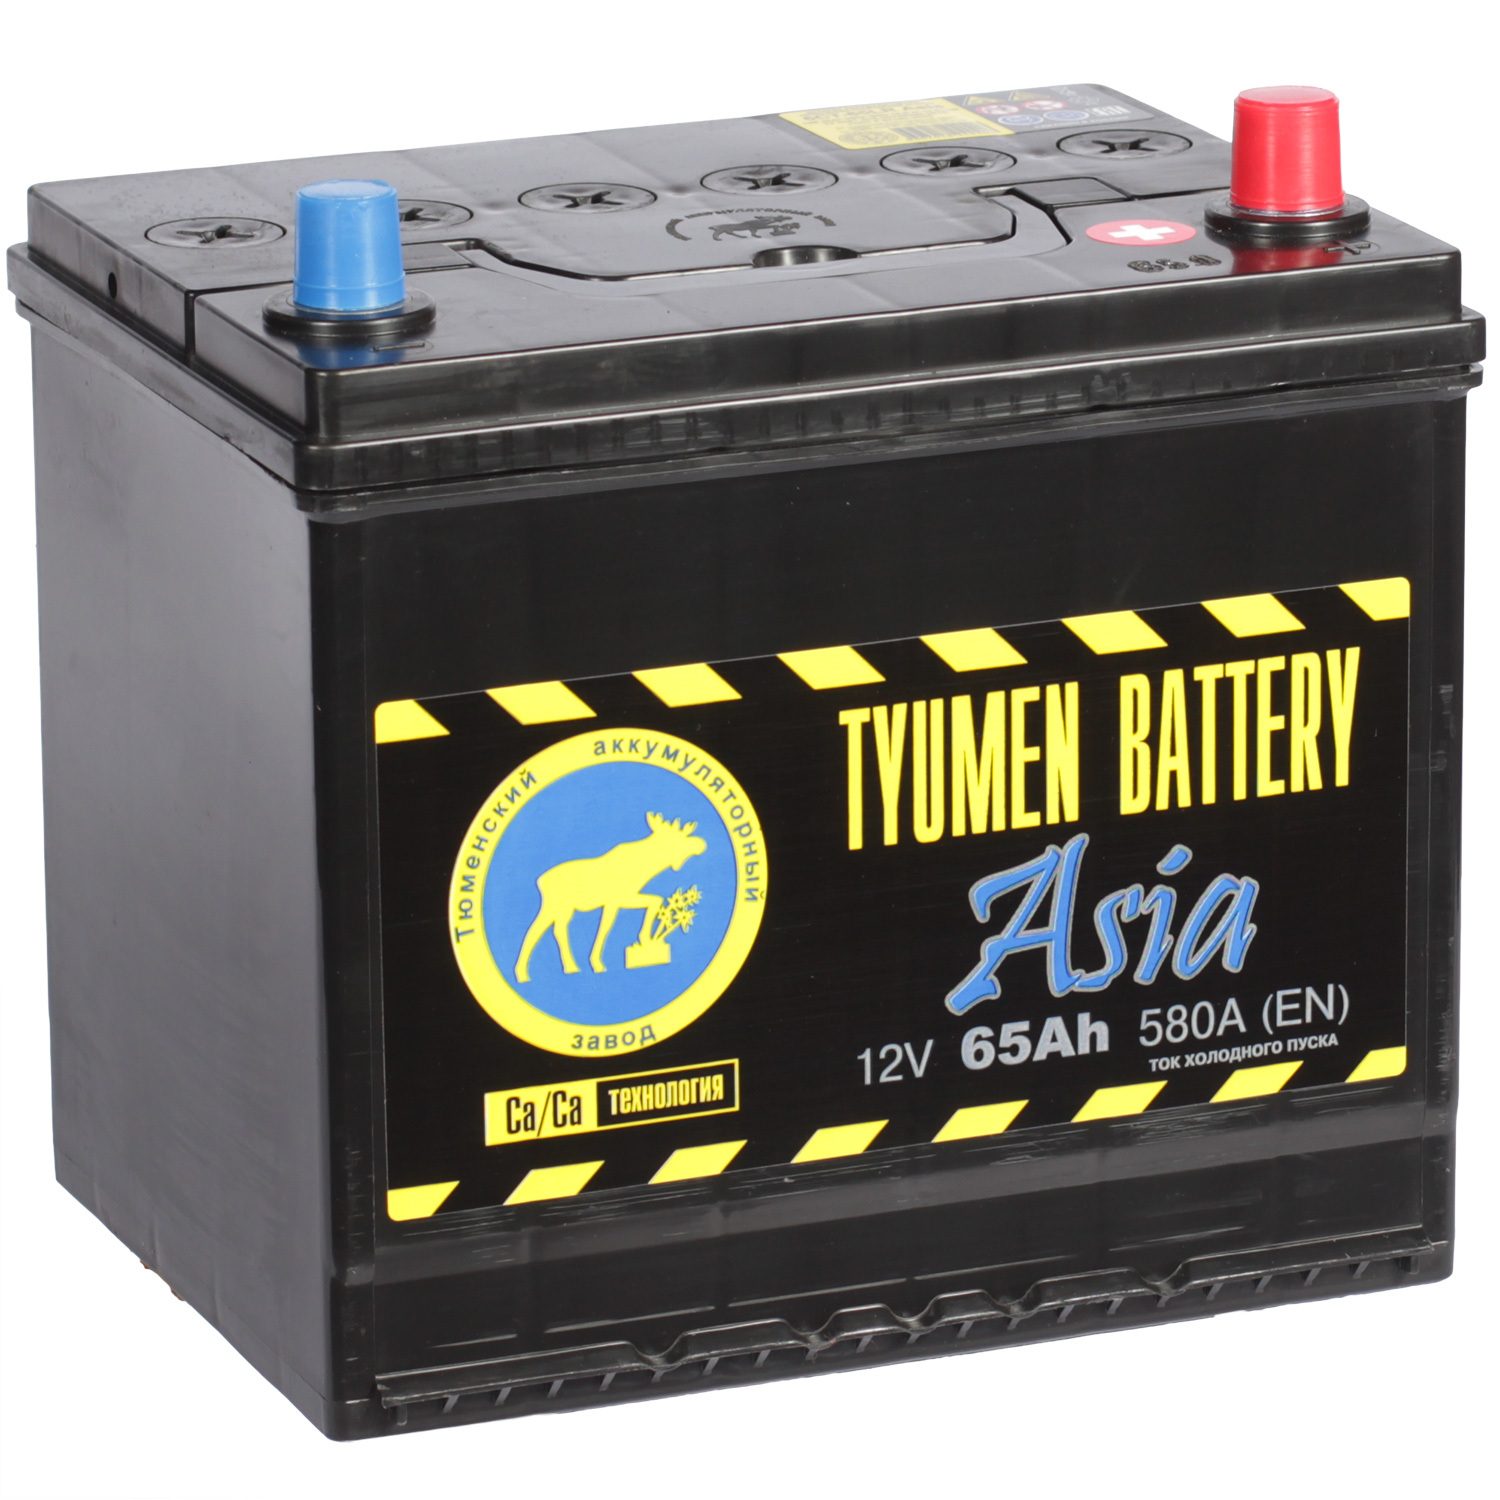 Tyumen Battery Автомобильный аккумулятор Tyumen Battery Asia 65 Ач обратная полярность D23L tyumen battery автомобильный аккумулятор tyumen battery asia 40 ач обратная полярность b19l